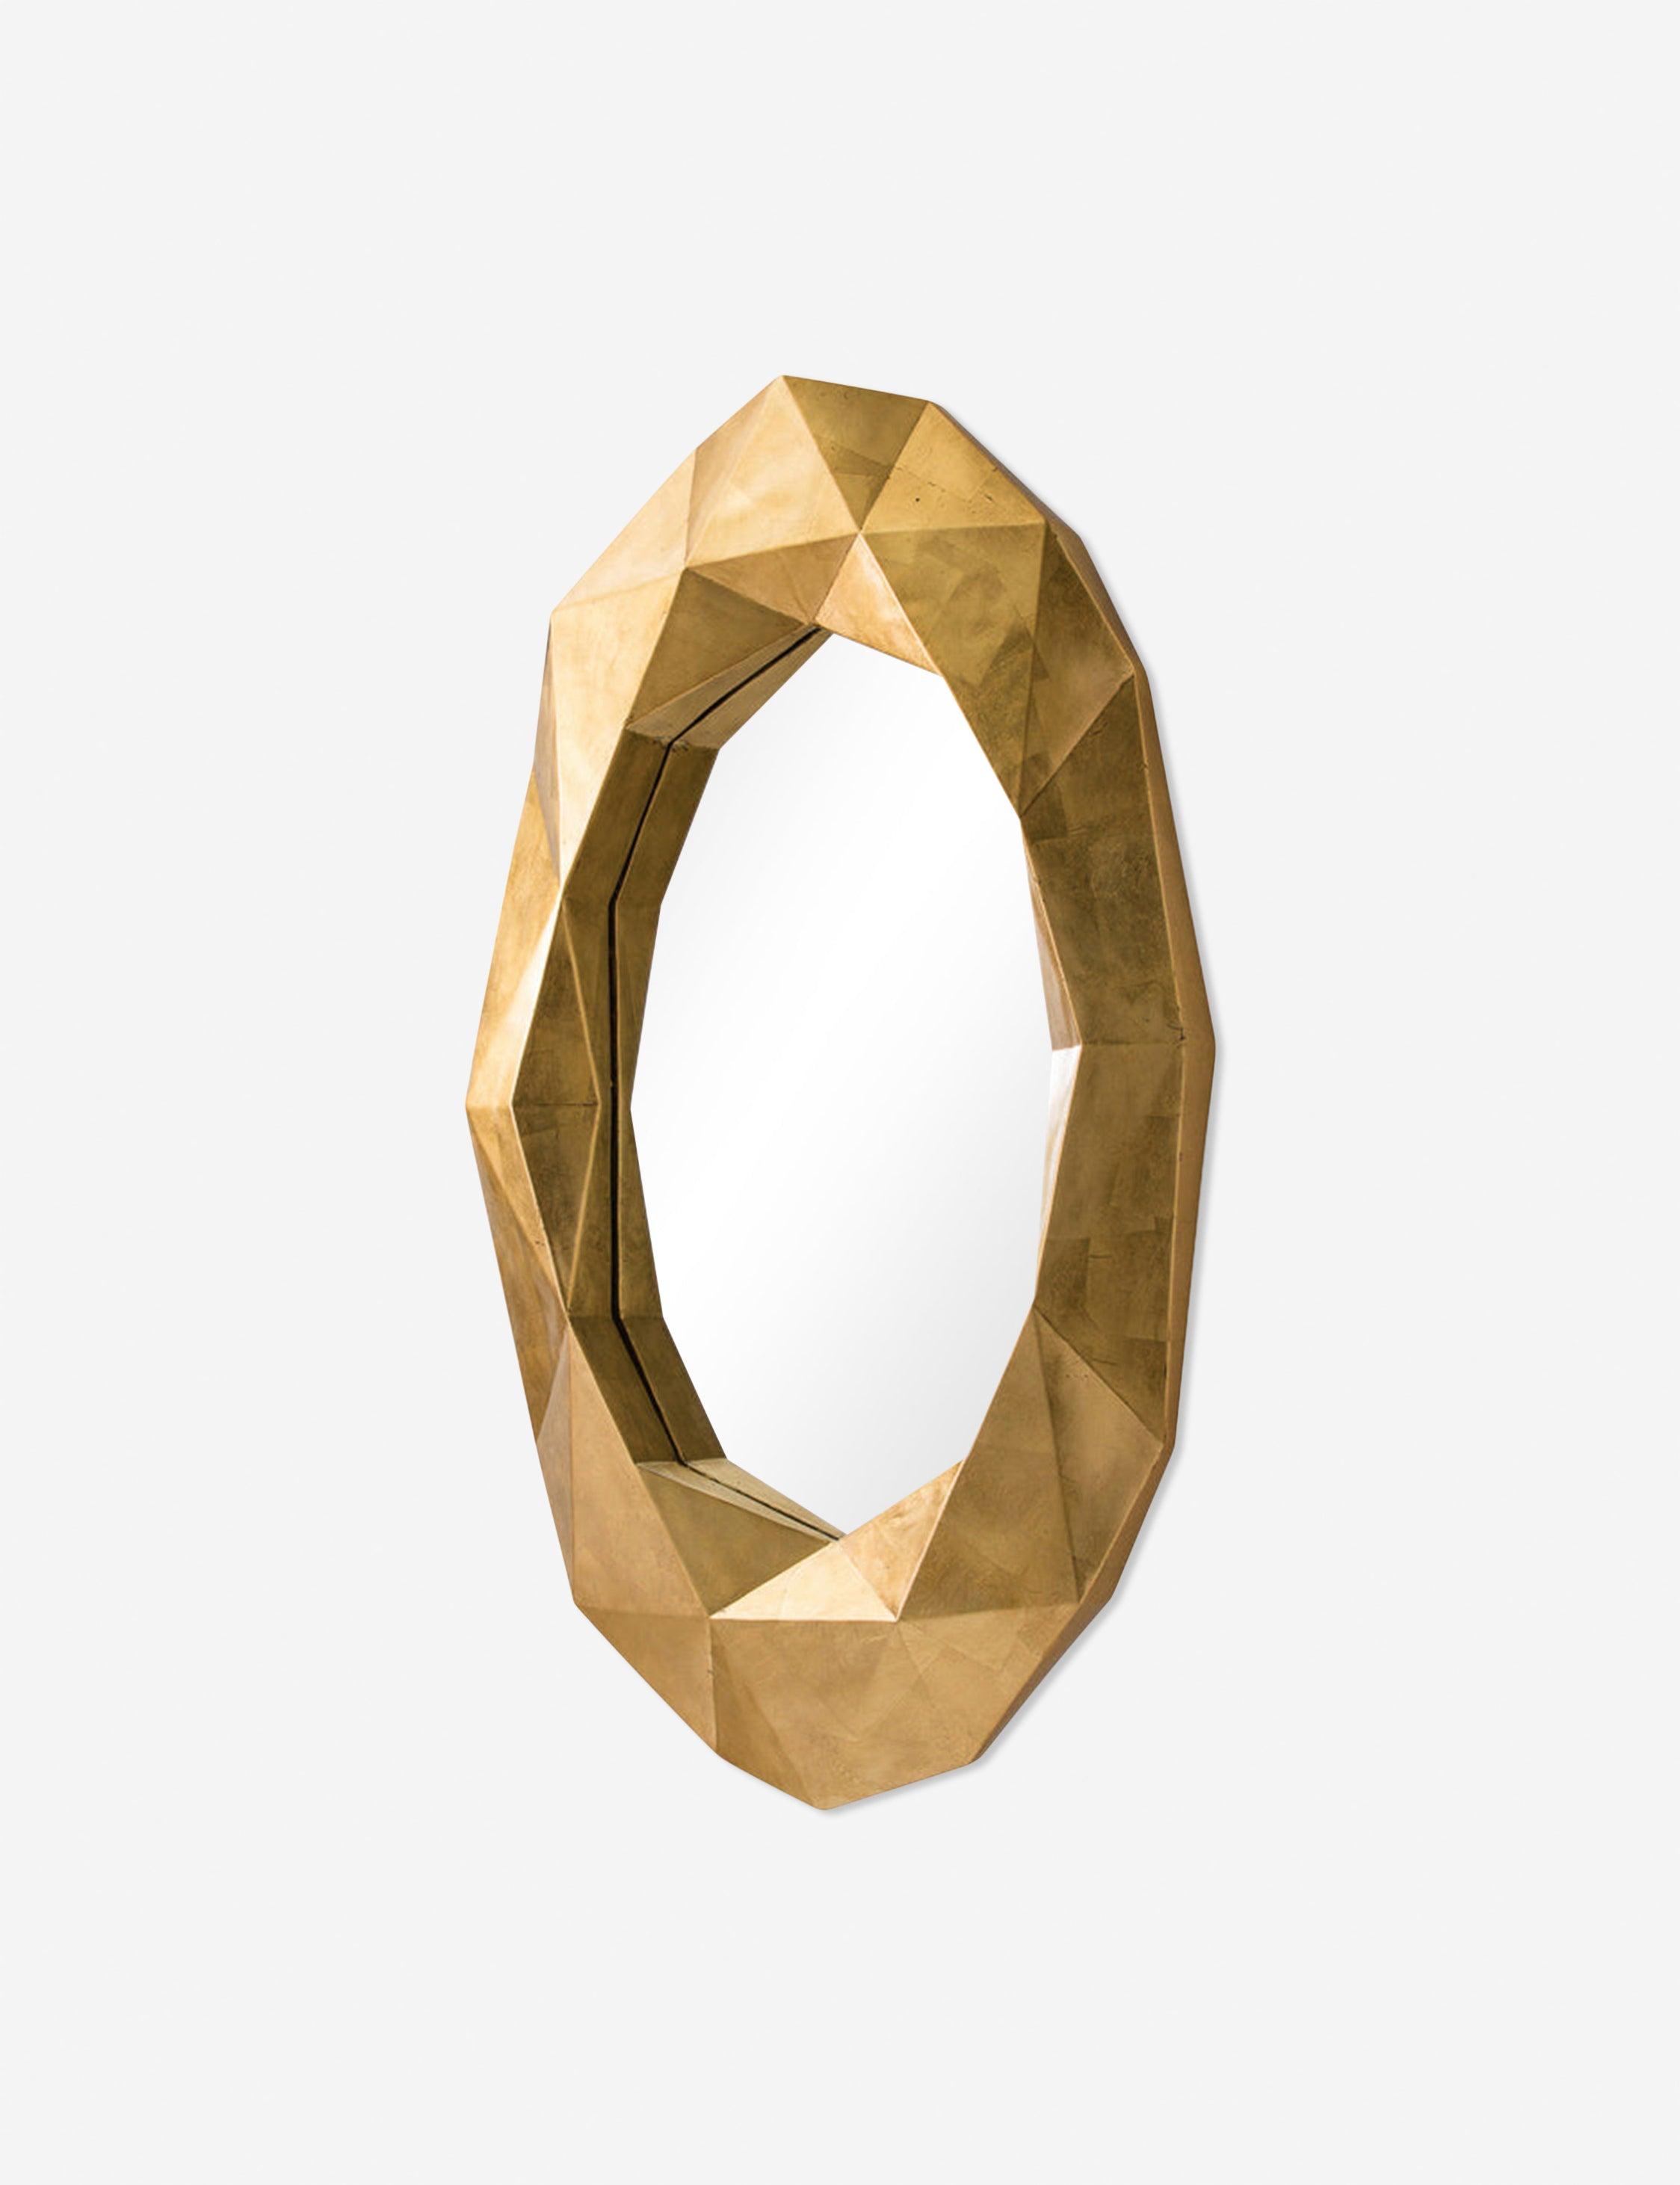 Fallon Geometric Gold Leaf 52" Oval Statement Mirror